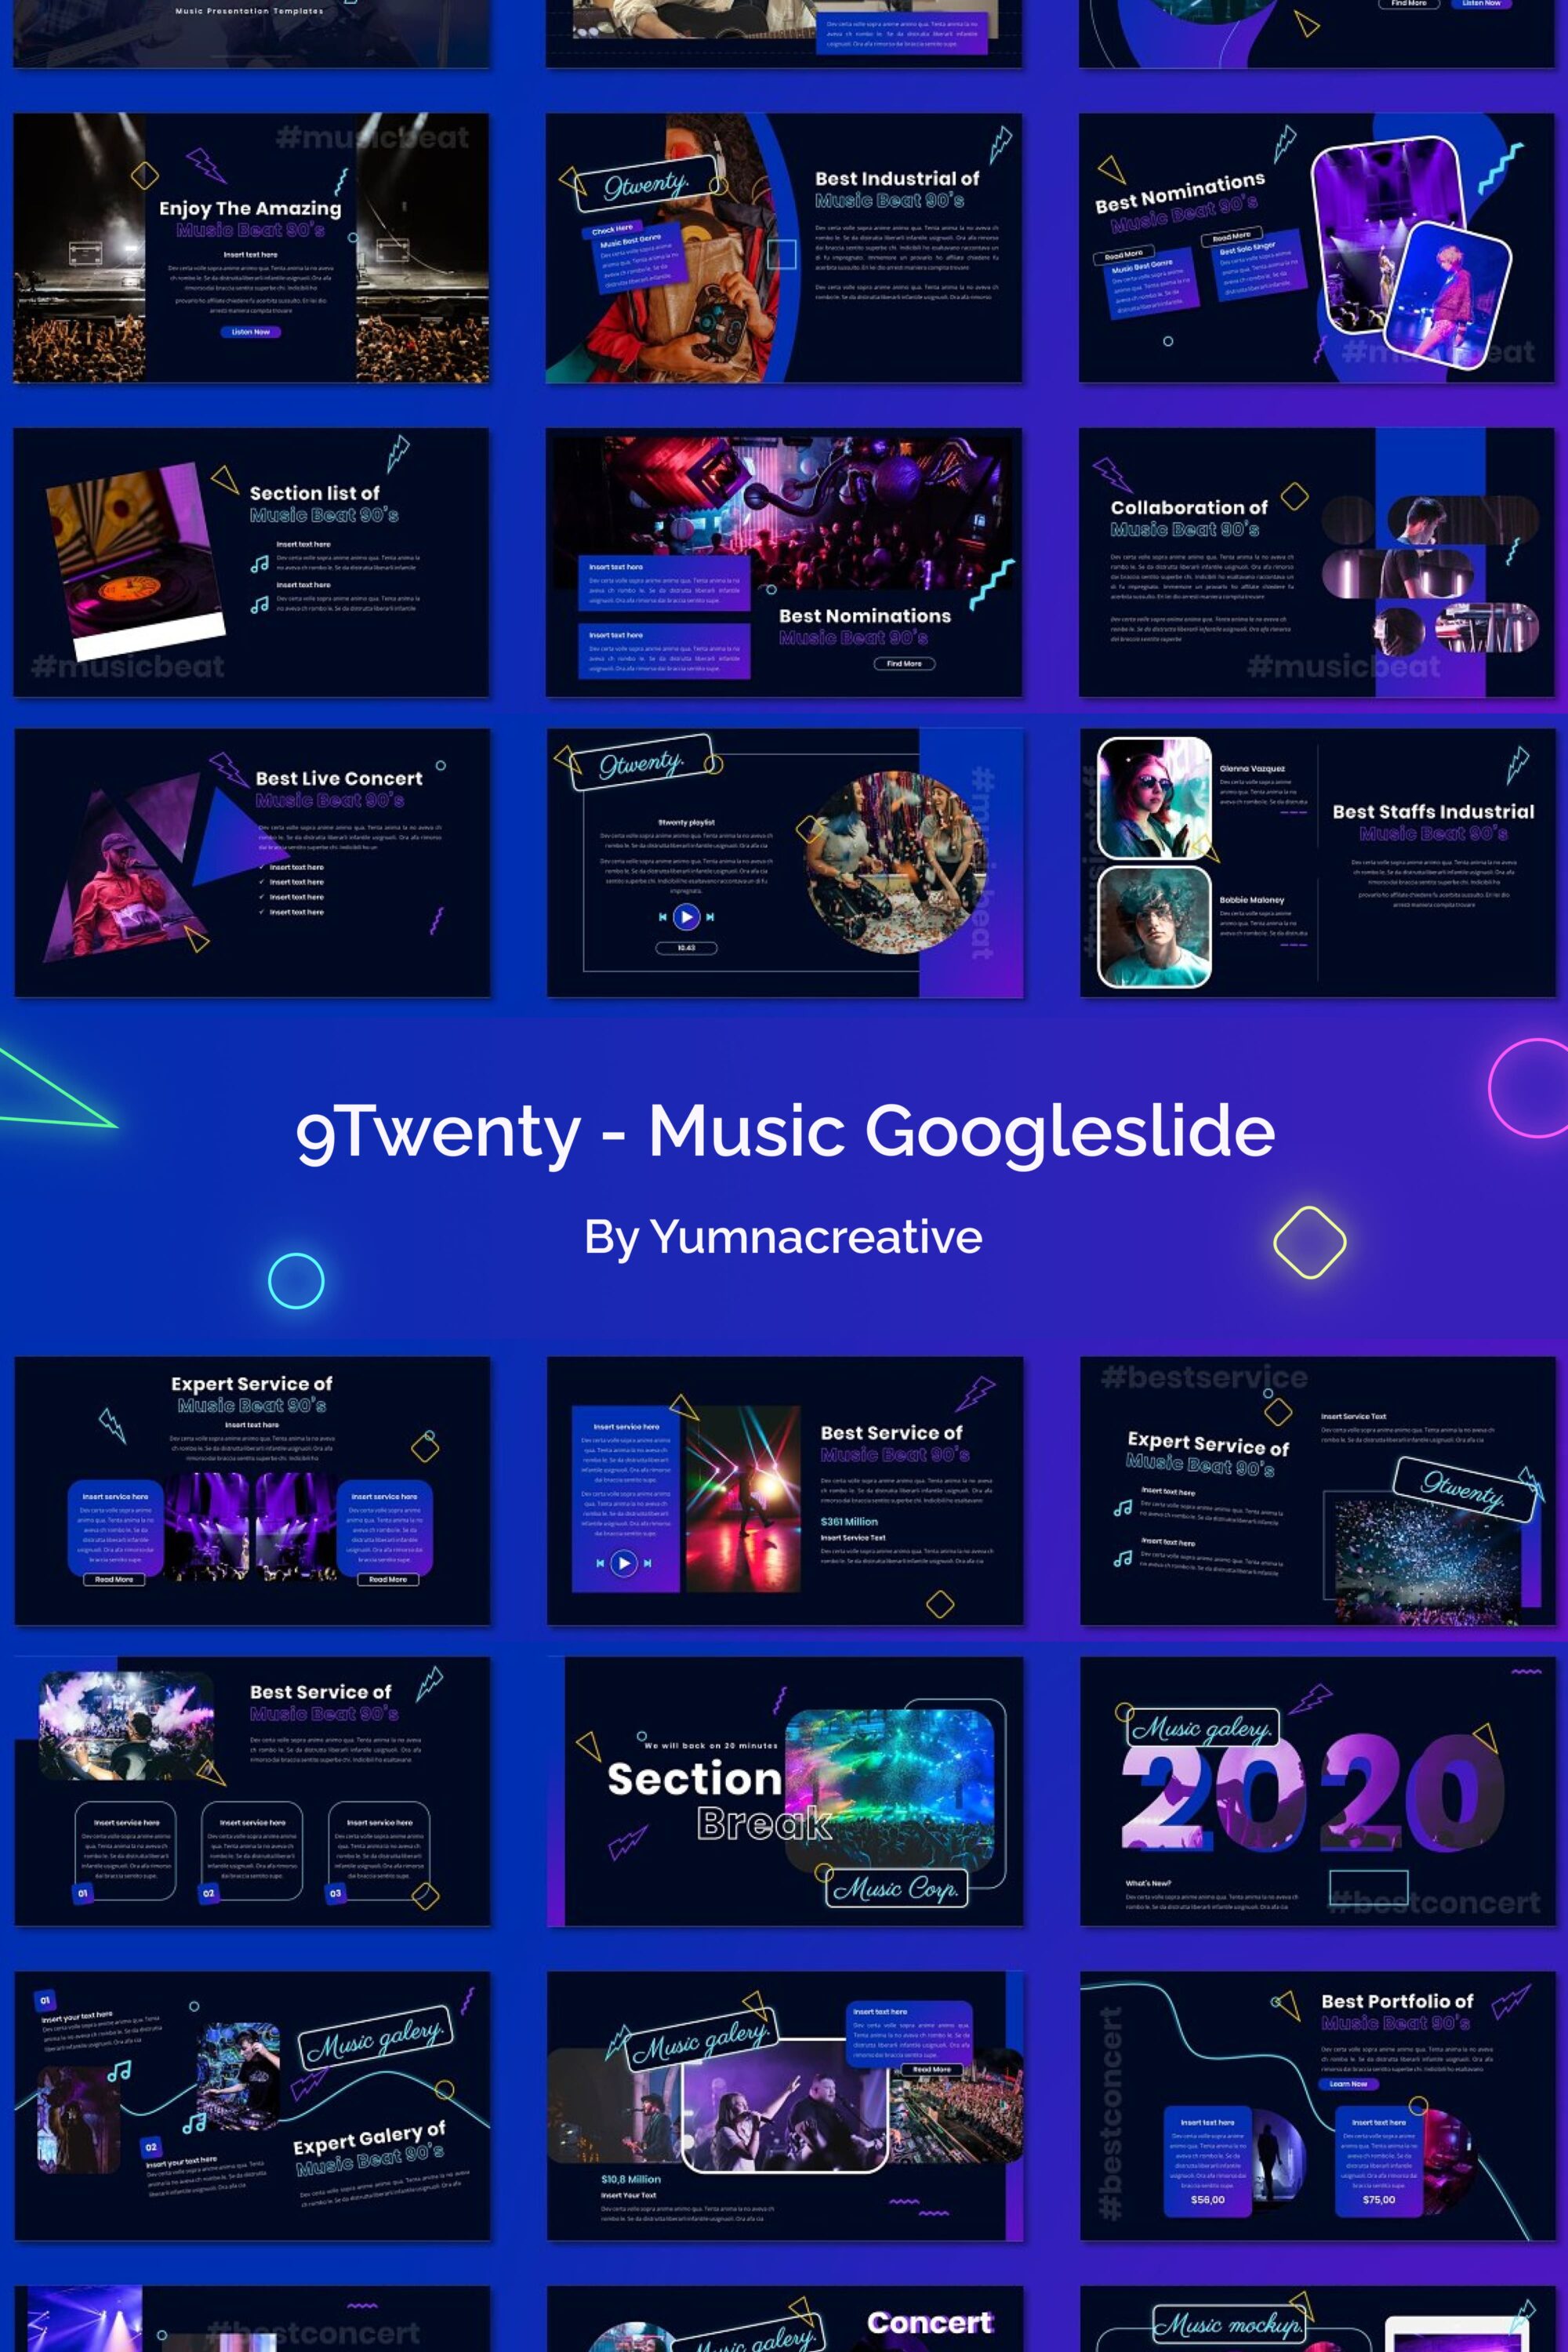 9twenty Music Google Slide - pinterest image preview.